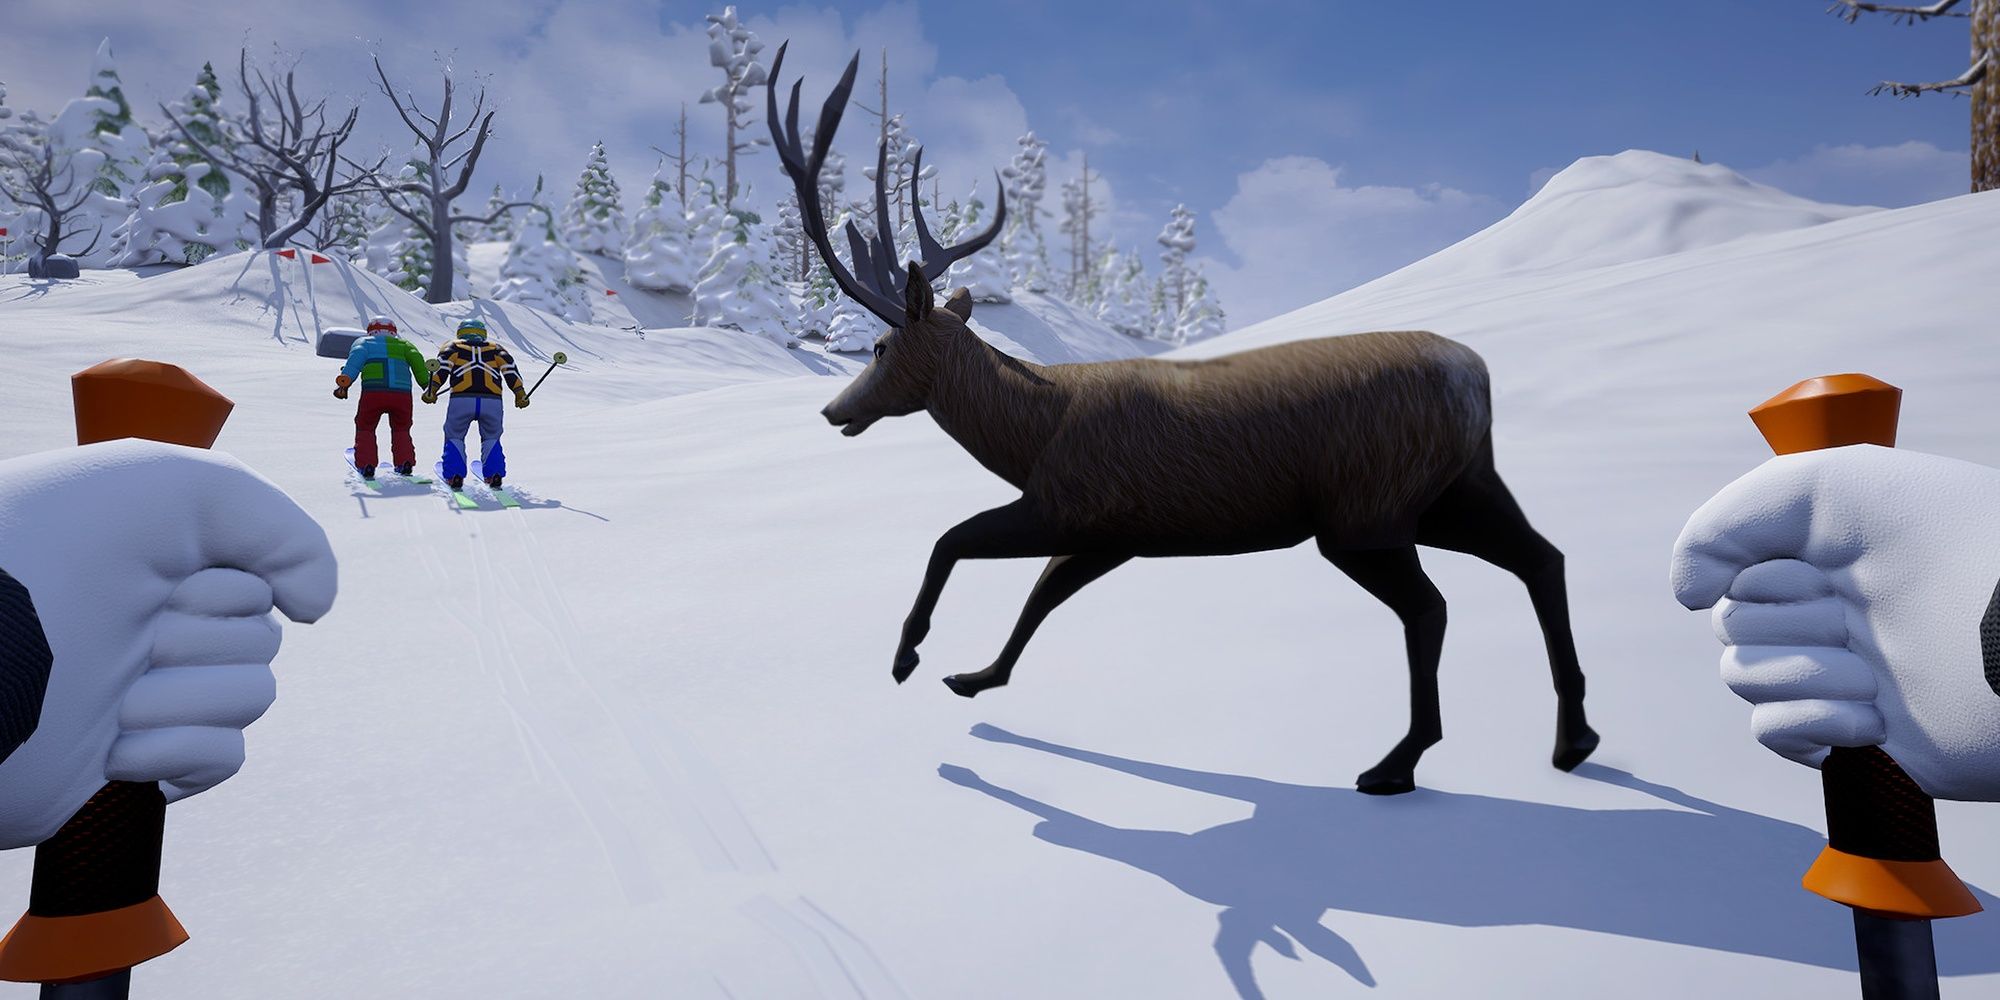 Skiing VR: Encountering A Reindeer During Multiplayer Free Roam